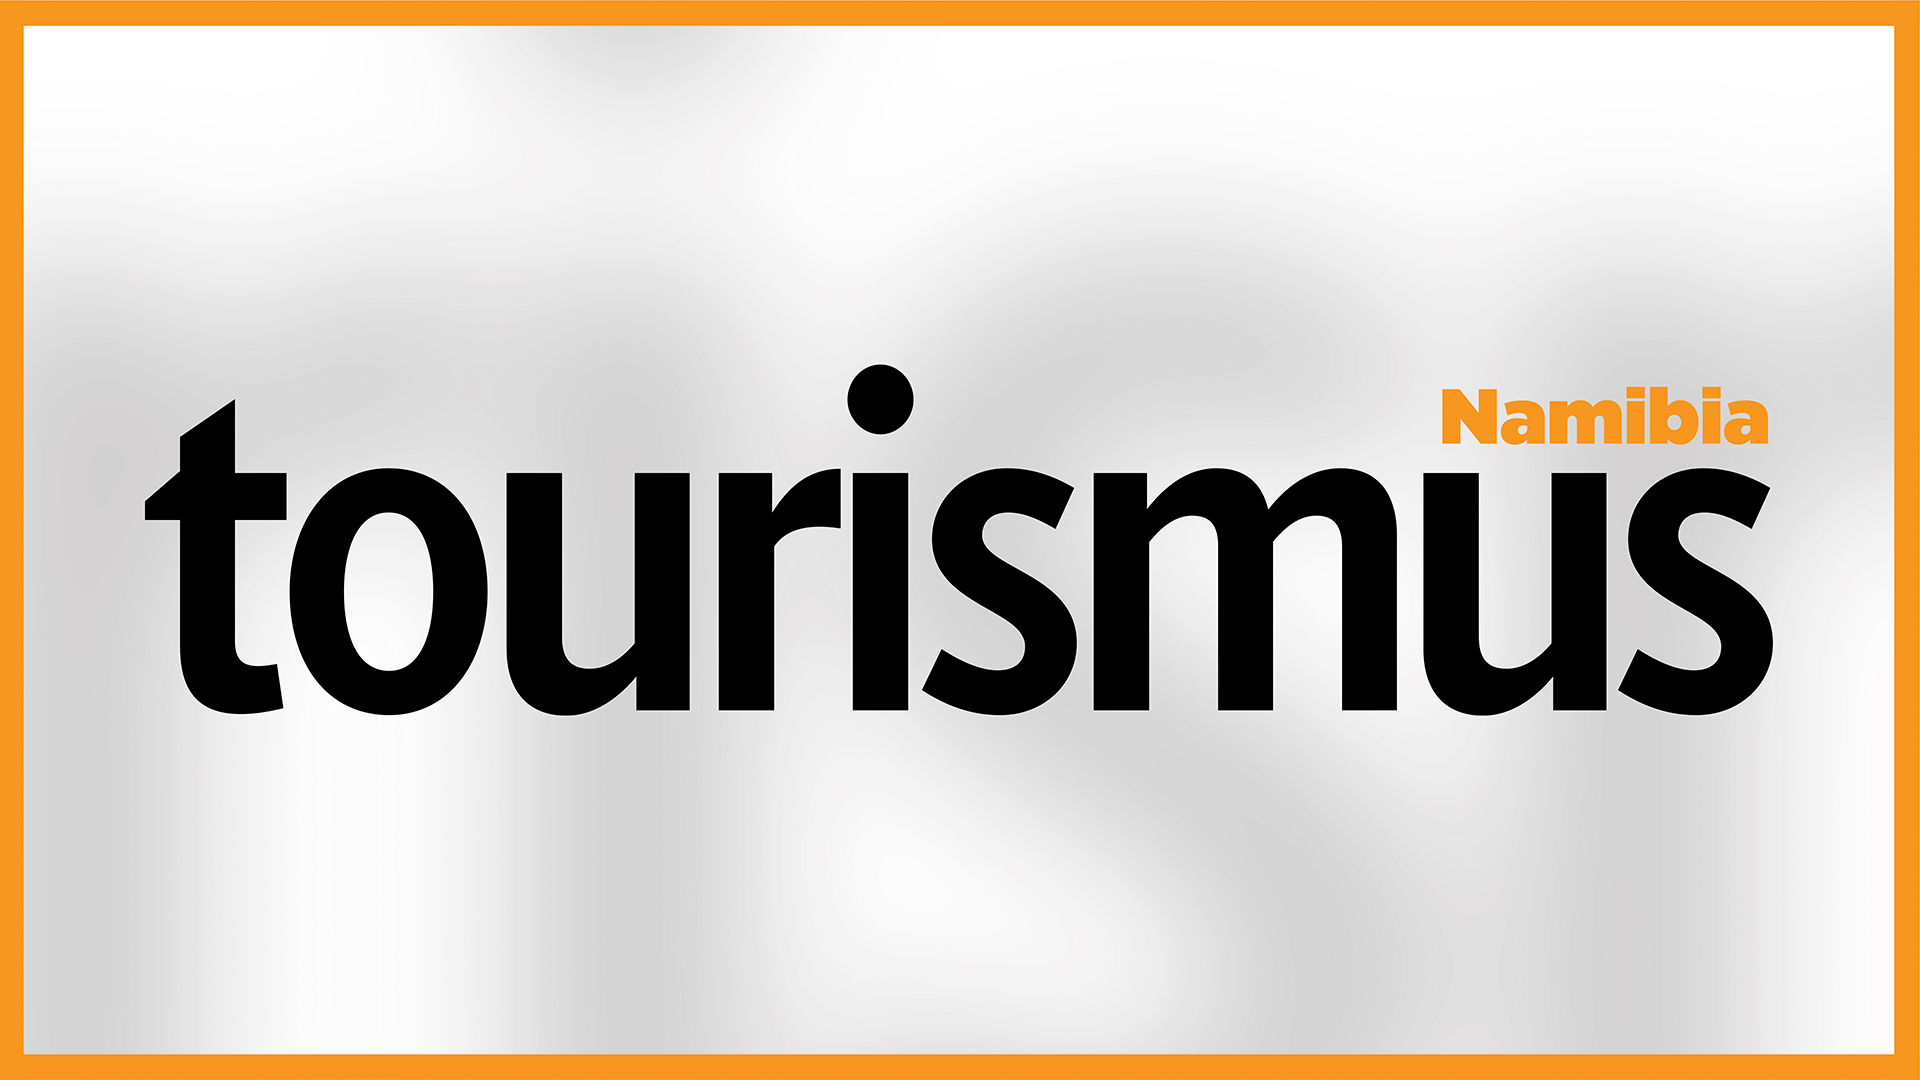 Tourismus Namibia (English) - 24 October 2021